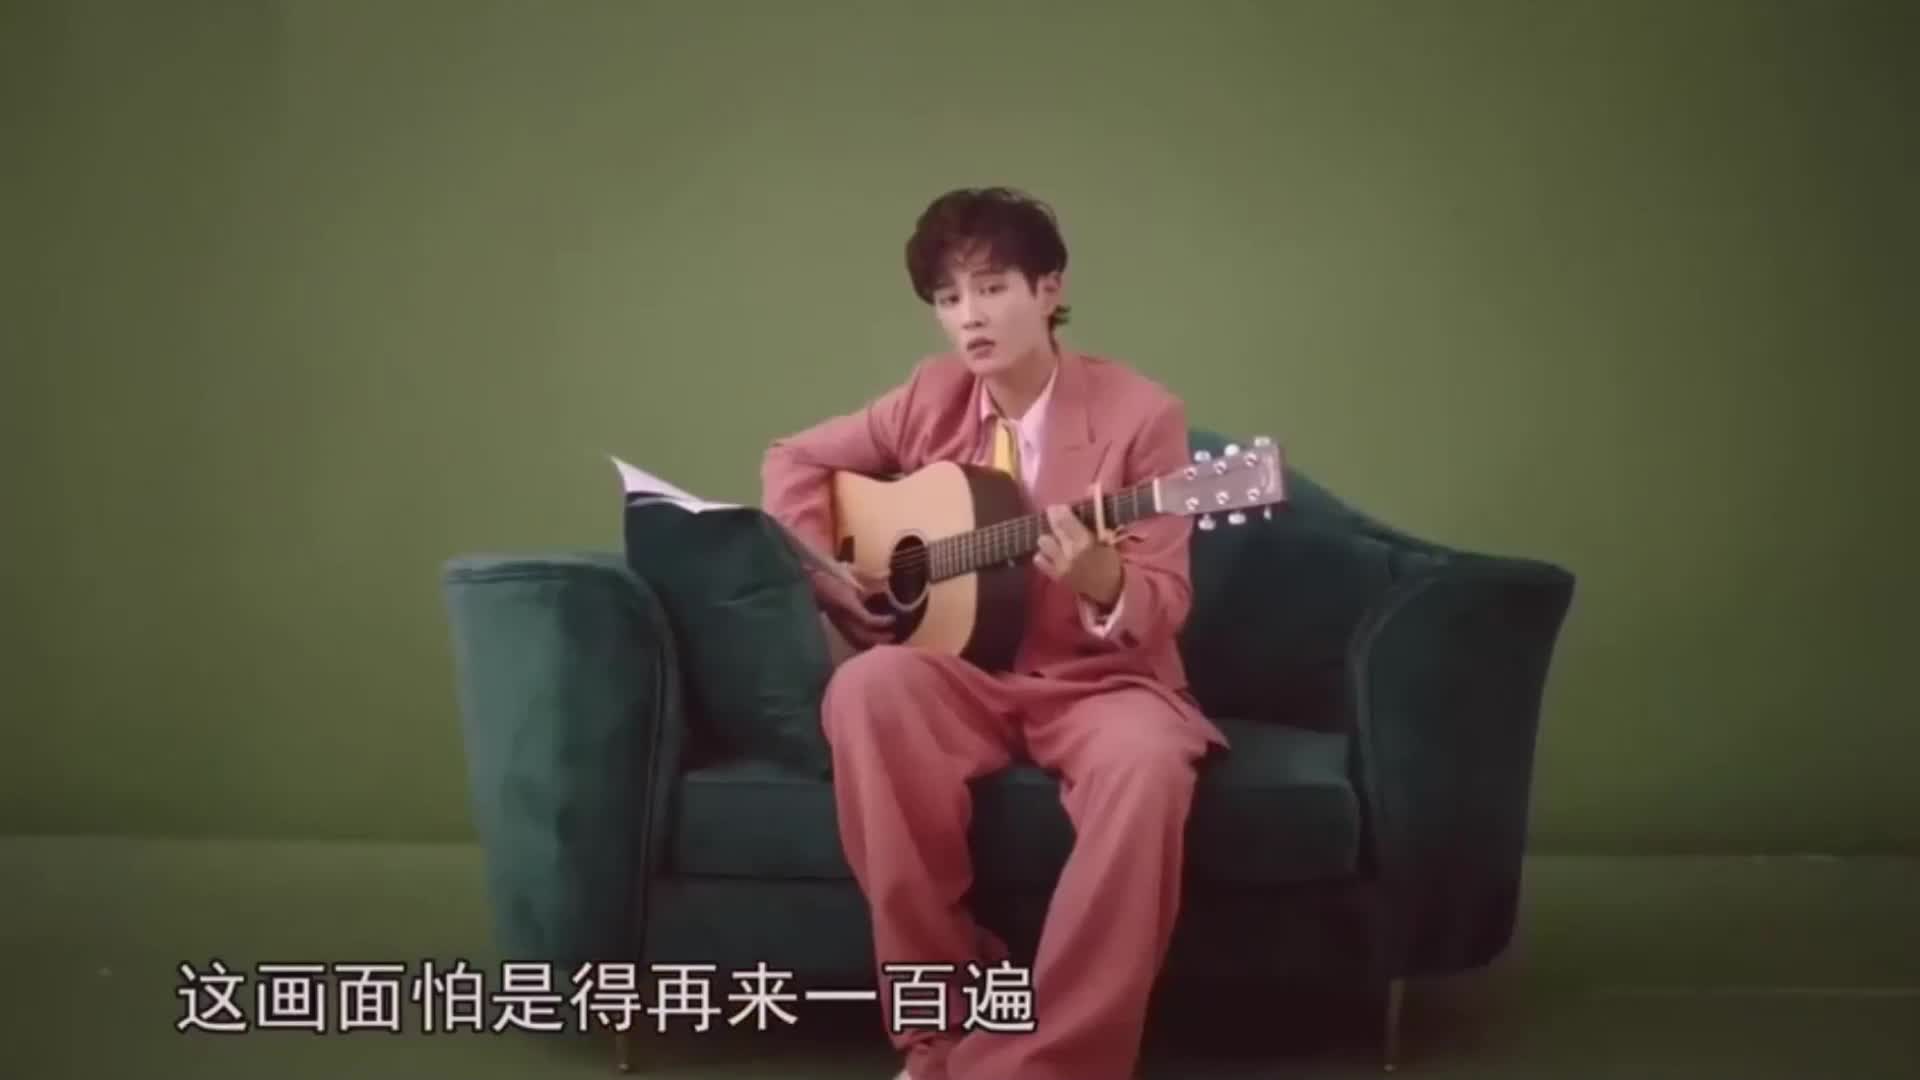 Li Wenhan is fond of singing 